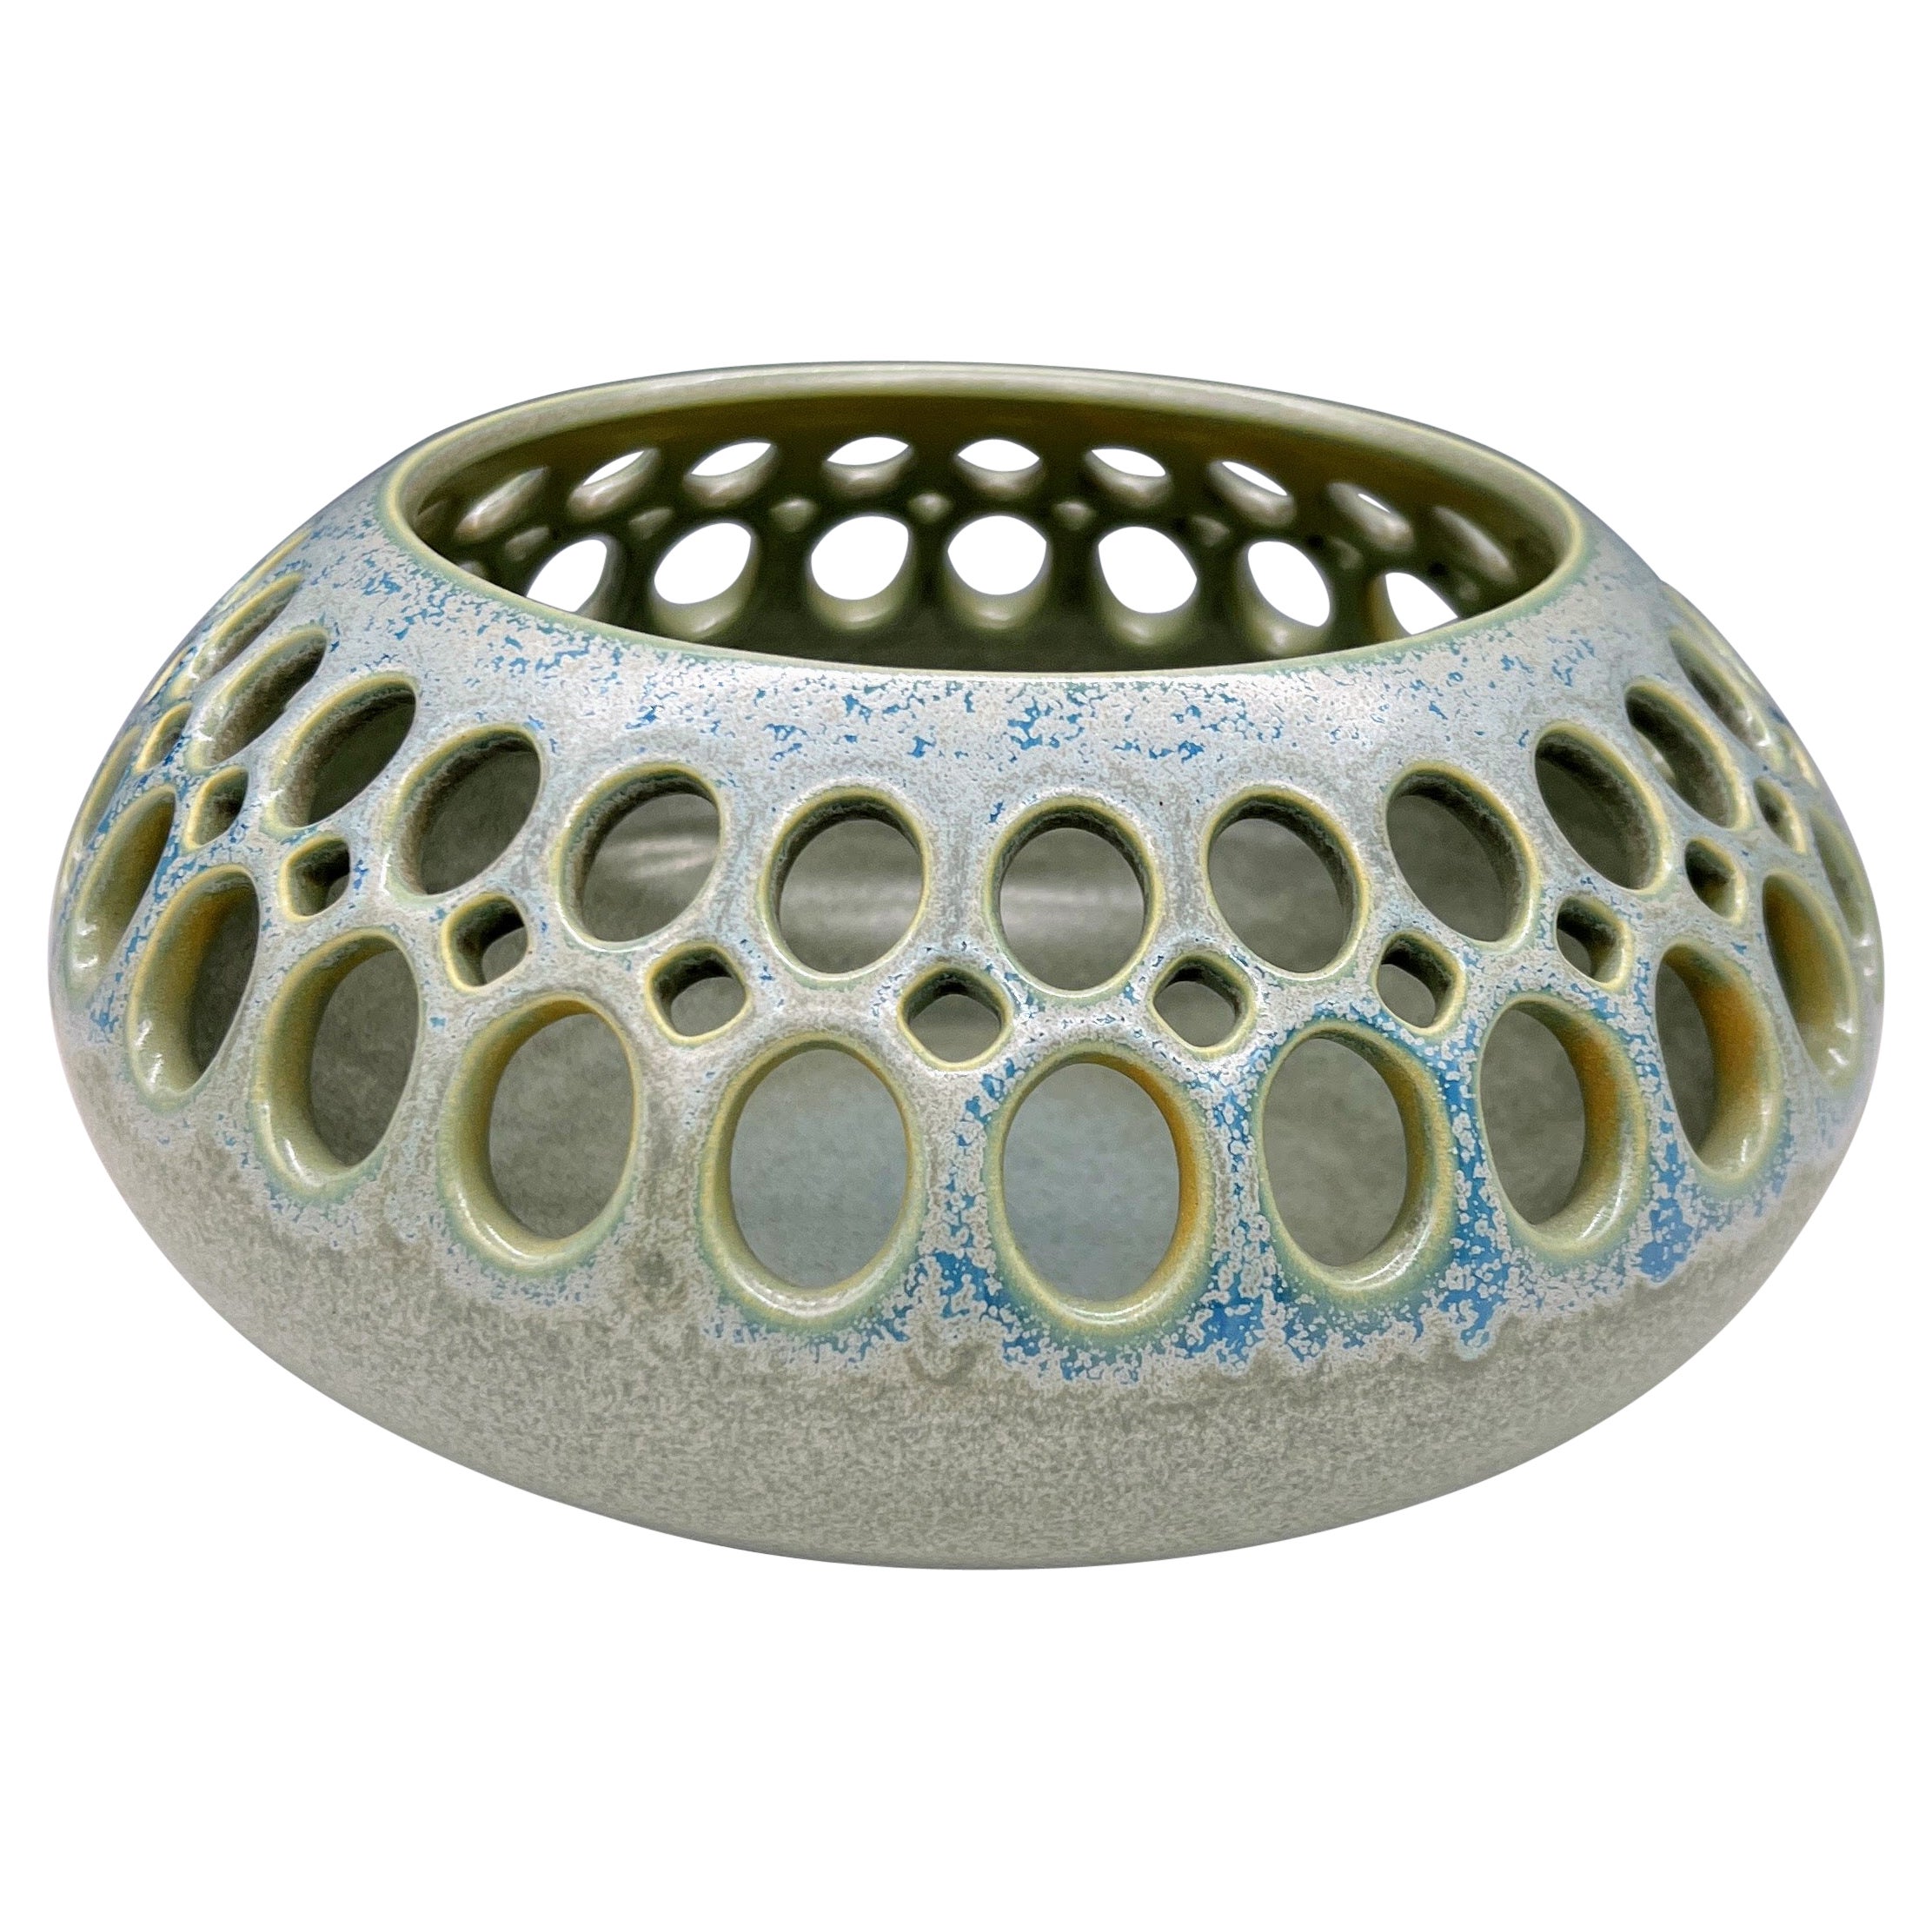 Pierced Ceramic Seedpot- Mossy Blue/Green For Sale